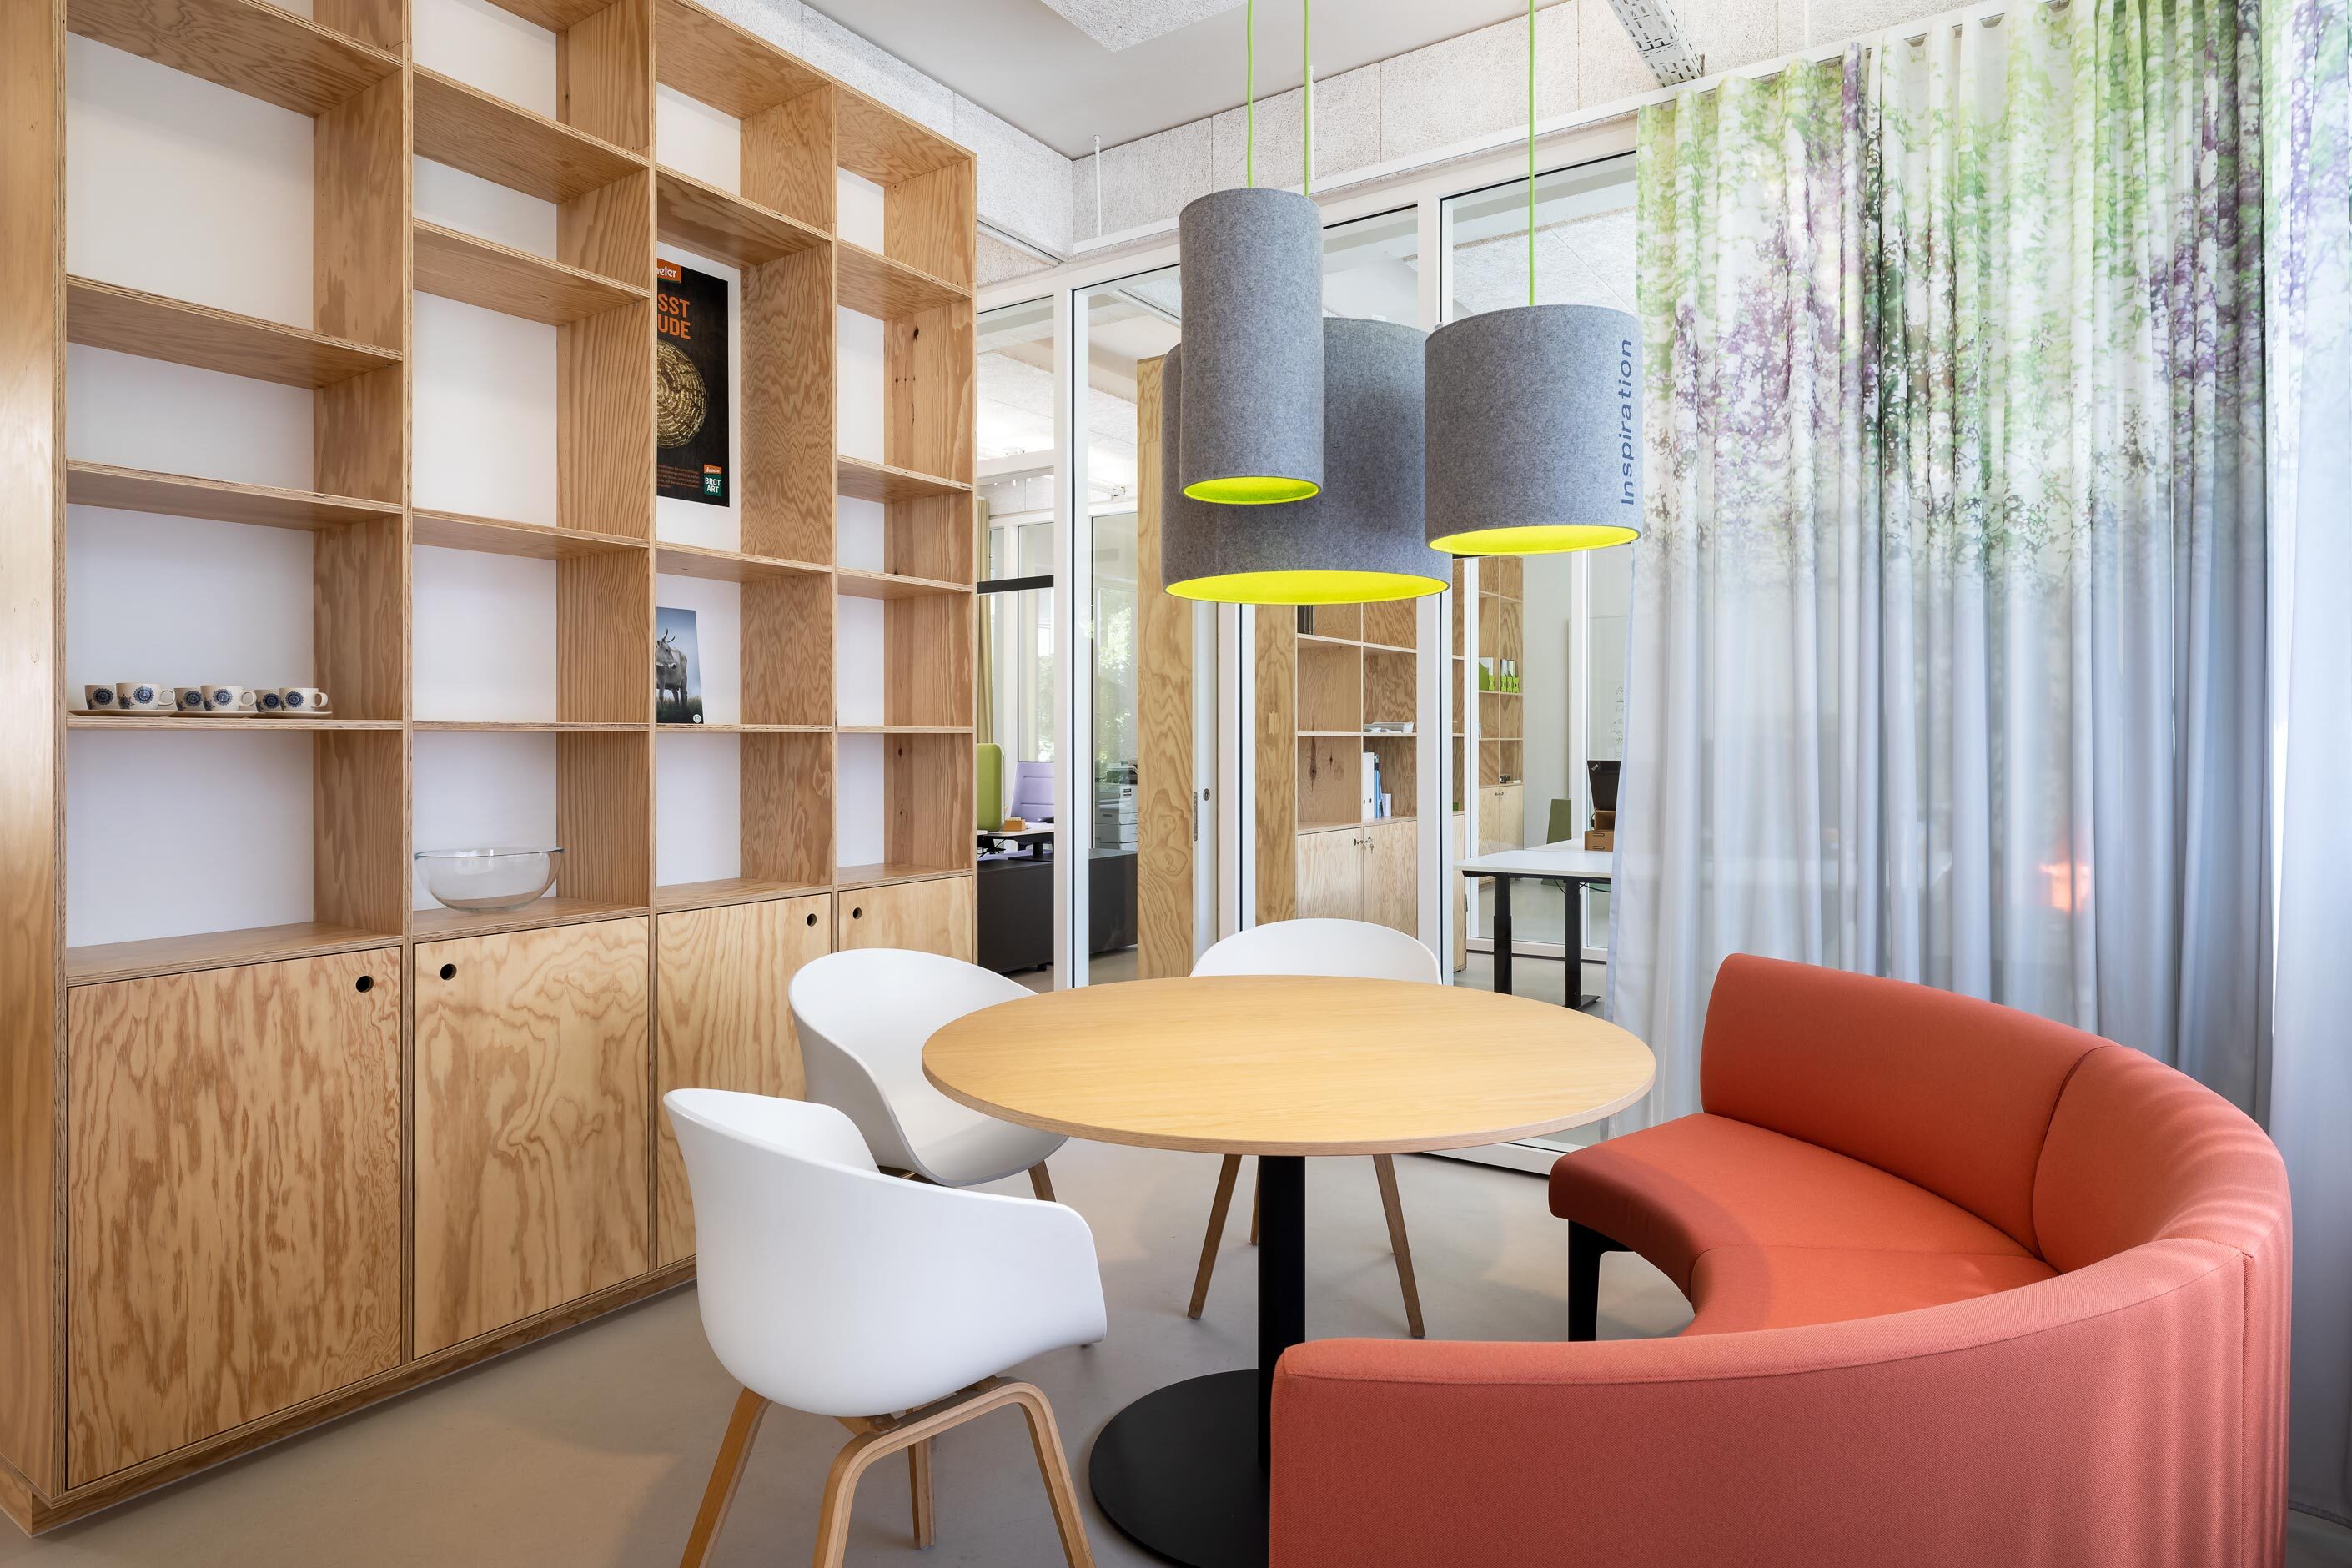 Demeter e. V. – location Berlin │ modern working spaces │ dynamic room design